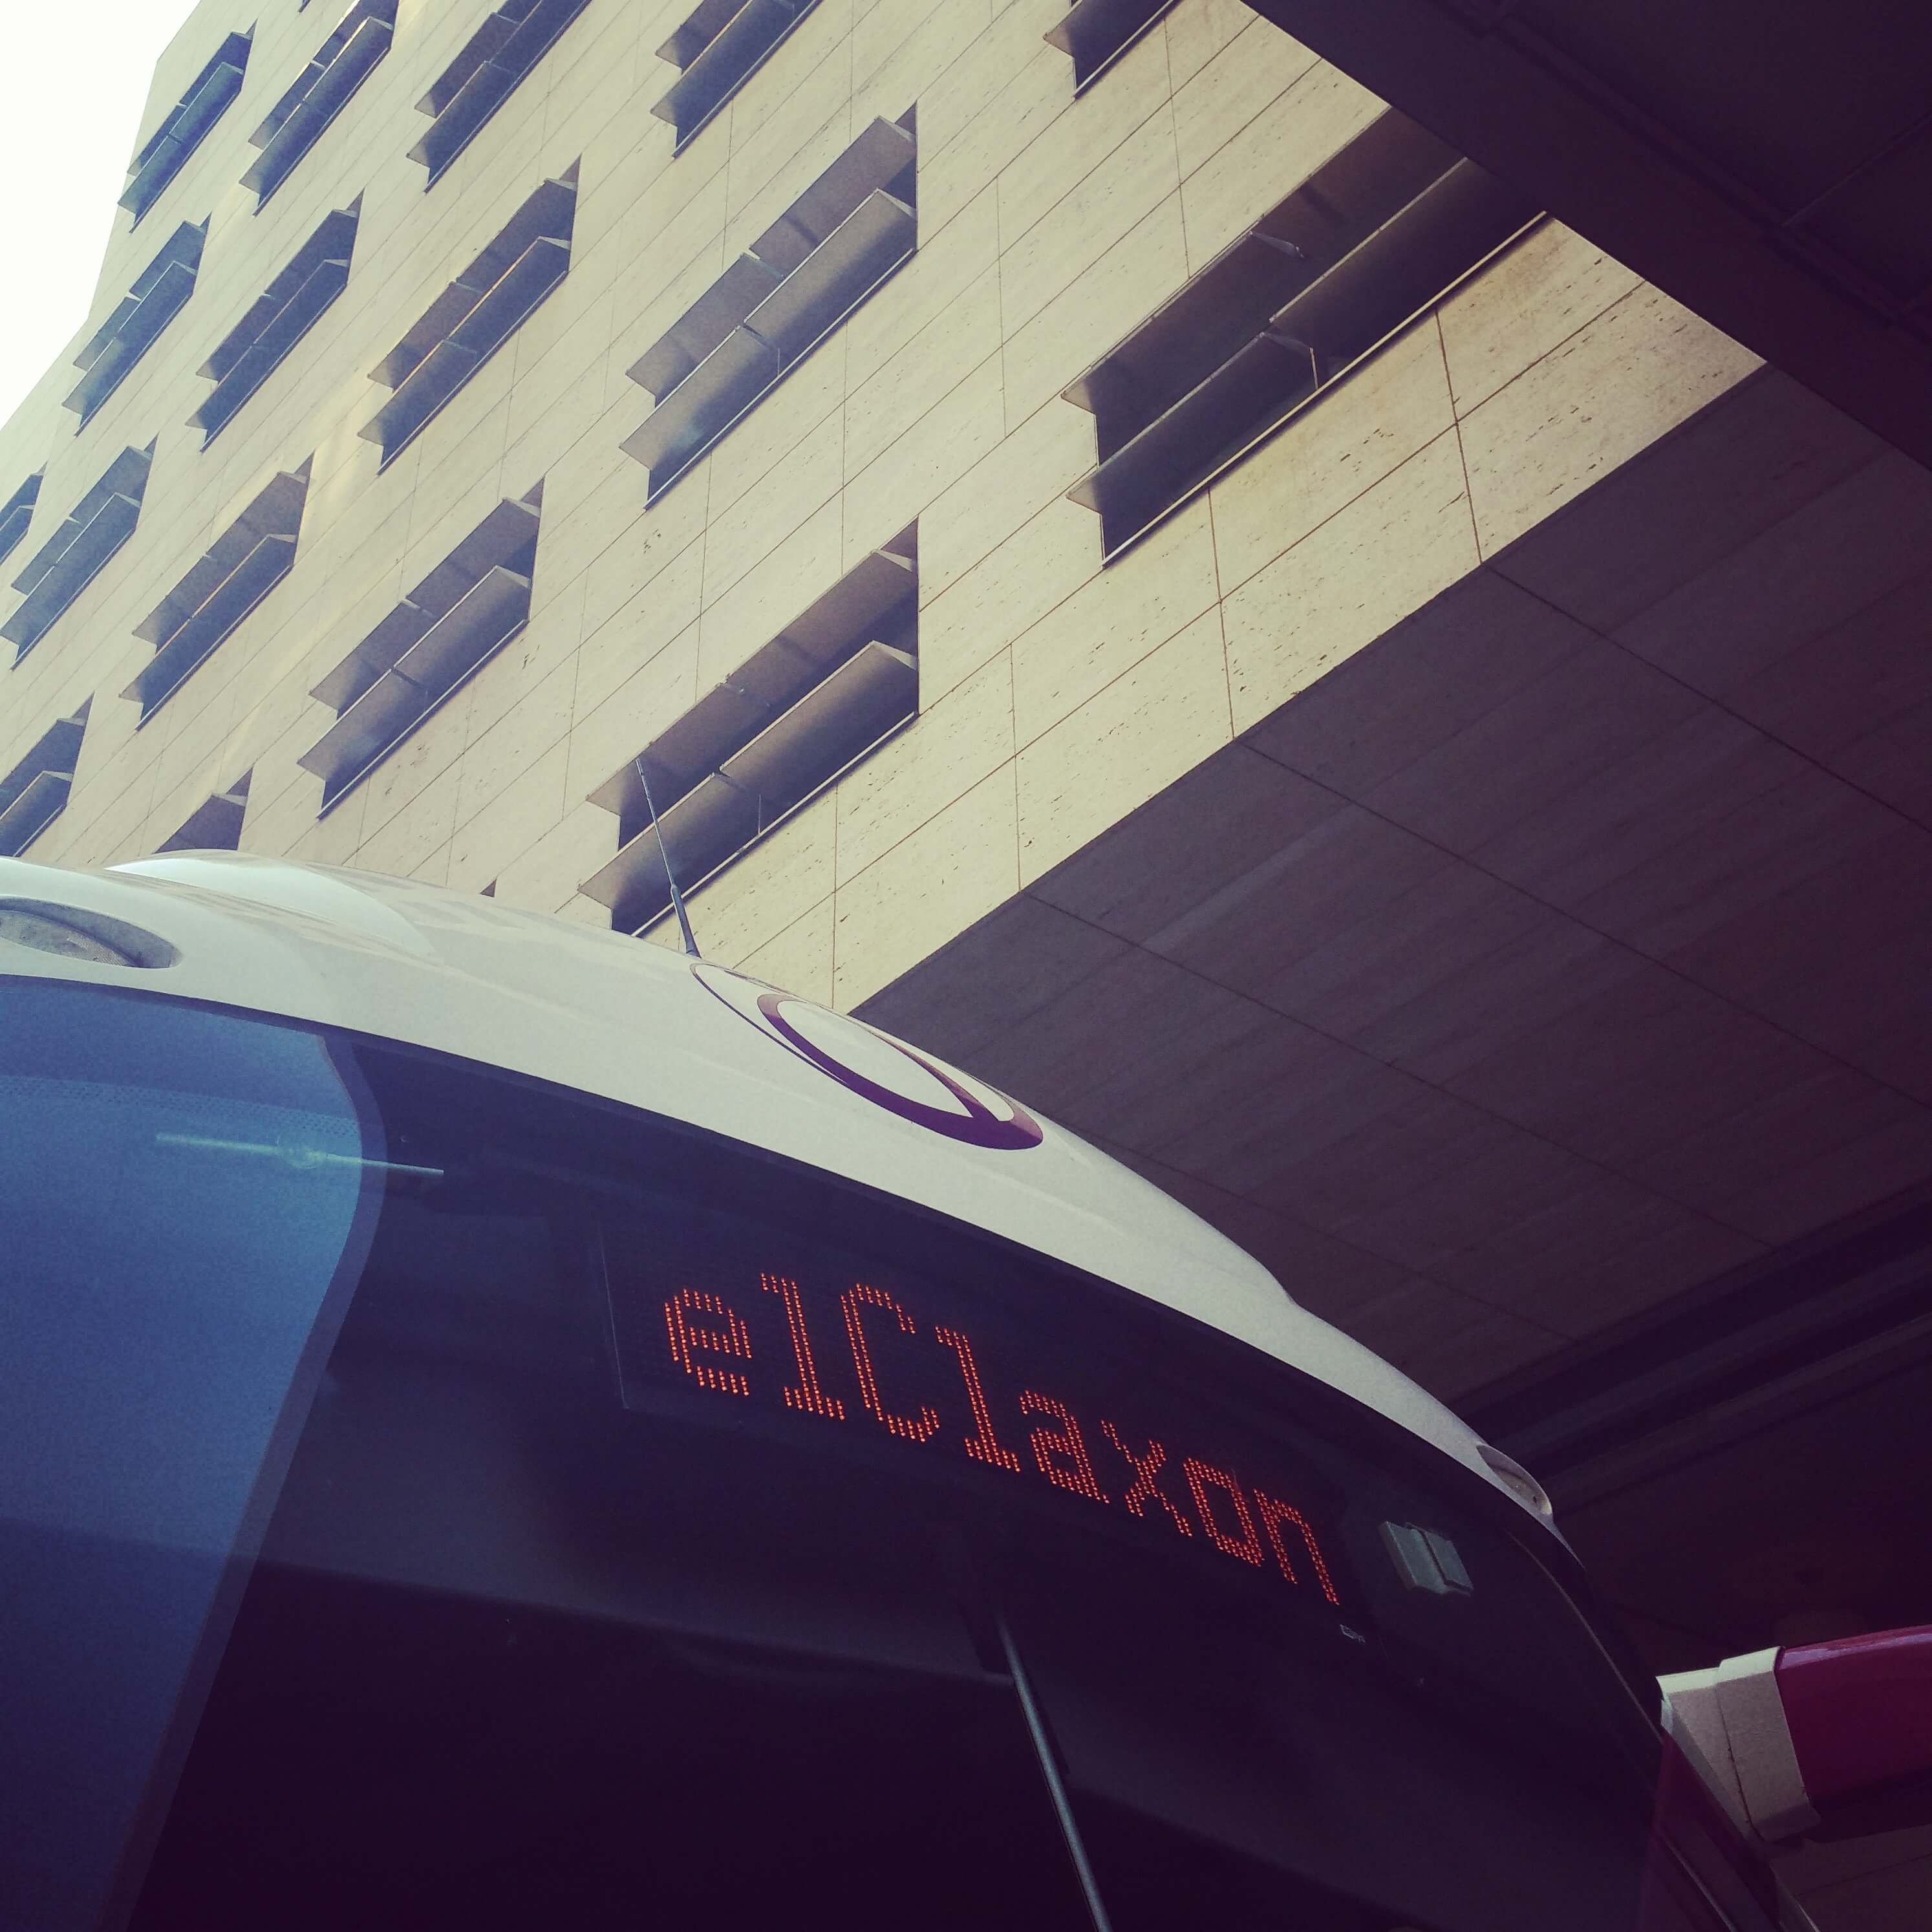 elClaxon exterior alquiler autocar irizar pb barcelona